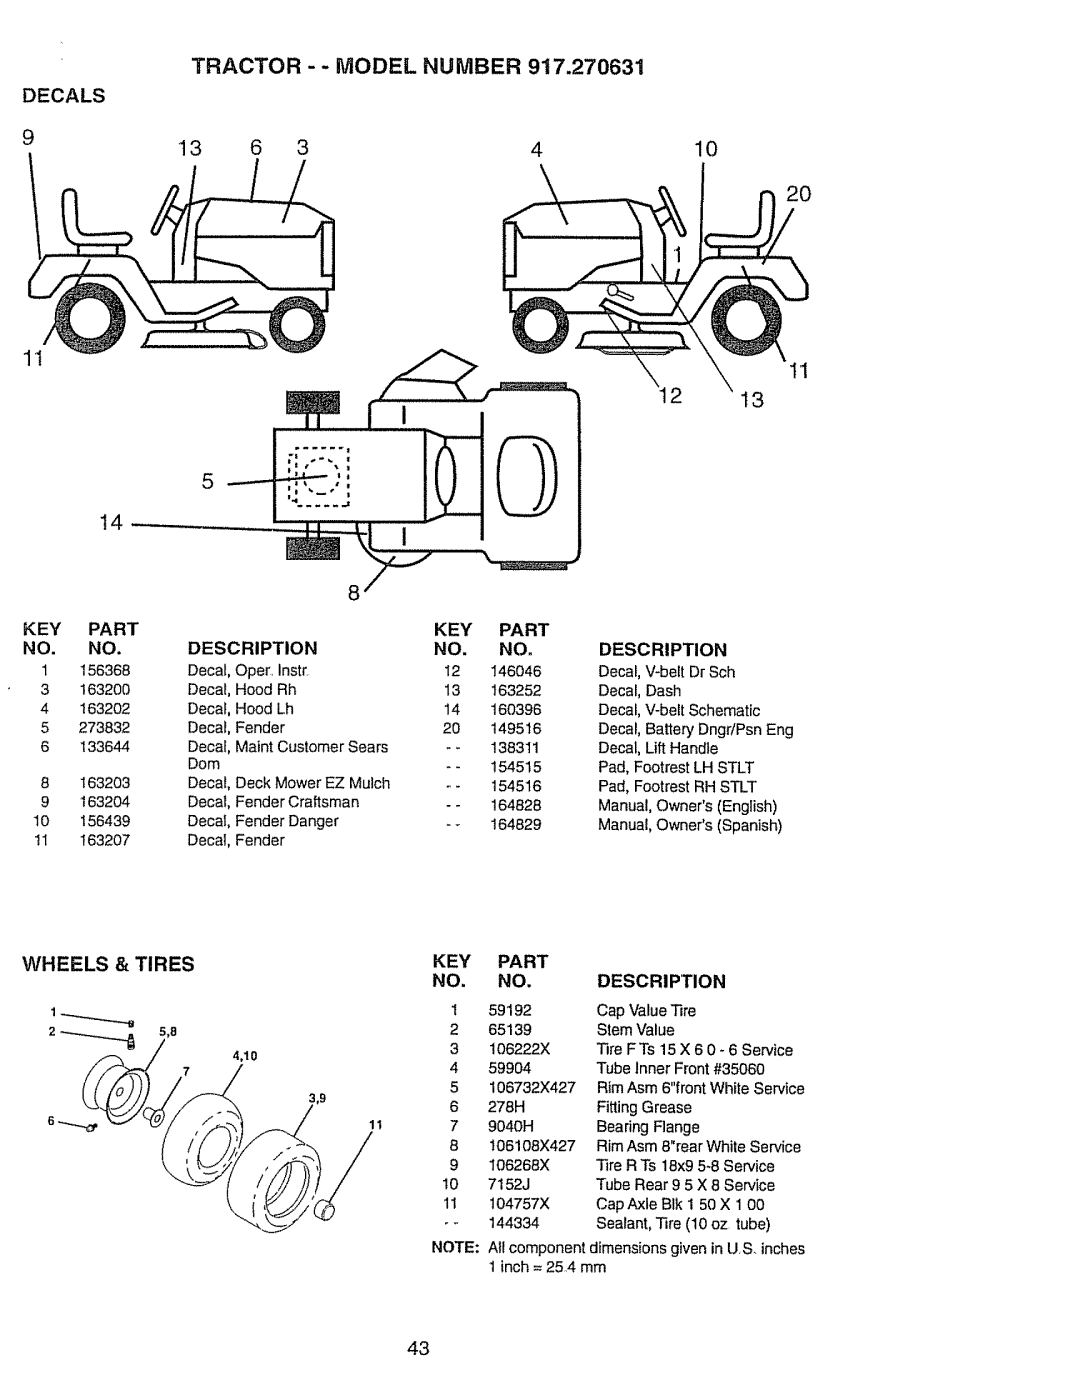 Craftsman 917.270631 owner manual 11 14, Tractor --Model Number, 20 11 12 8, Wheels & Tires 